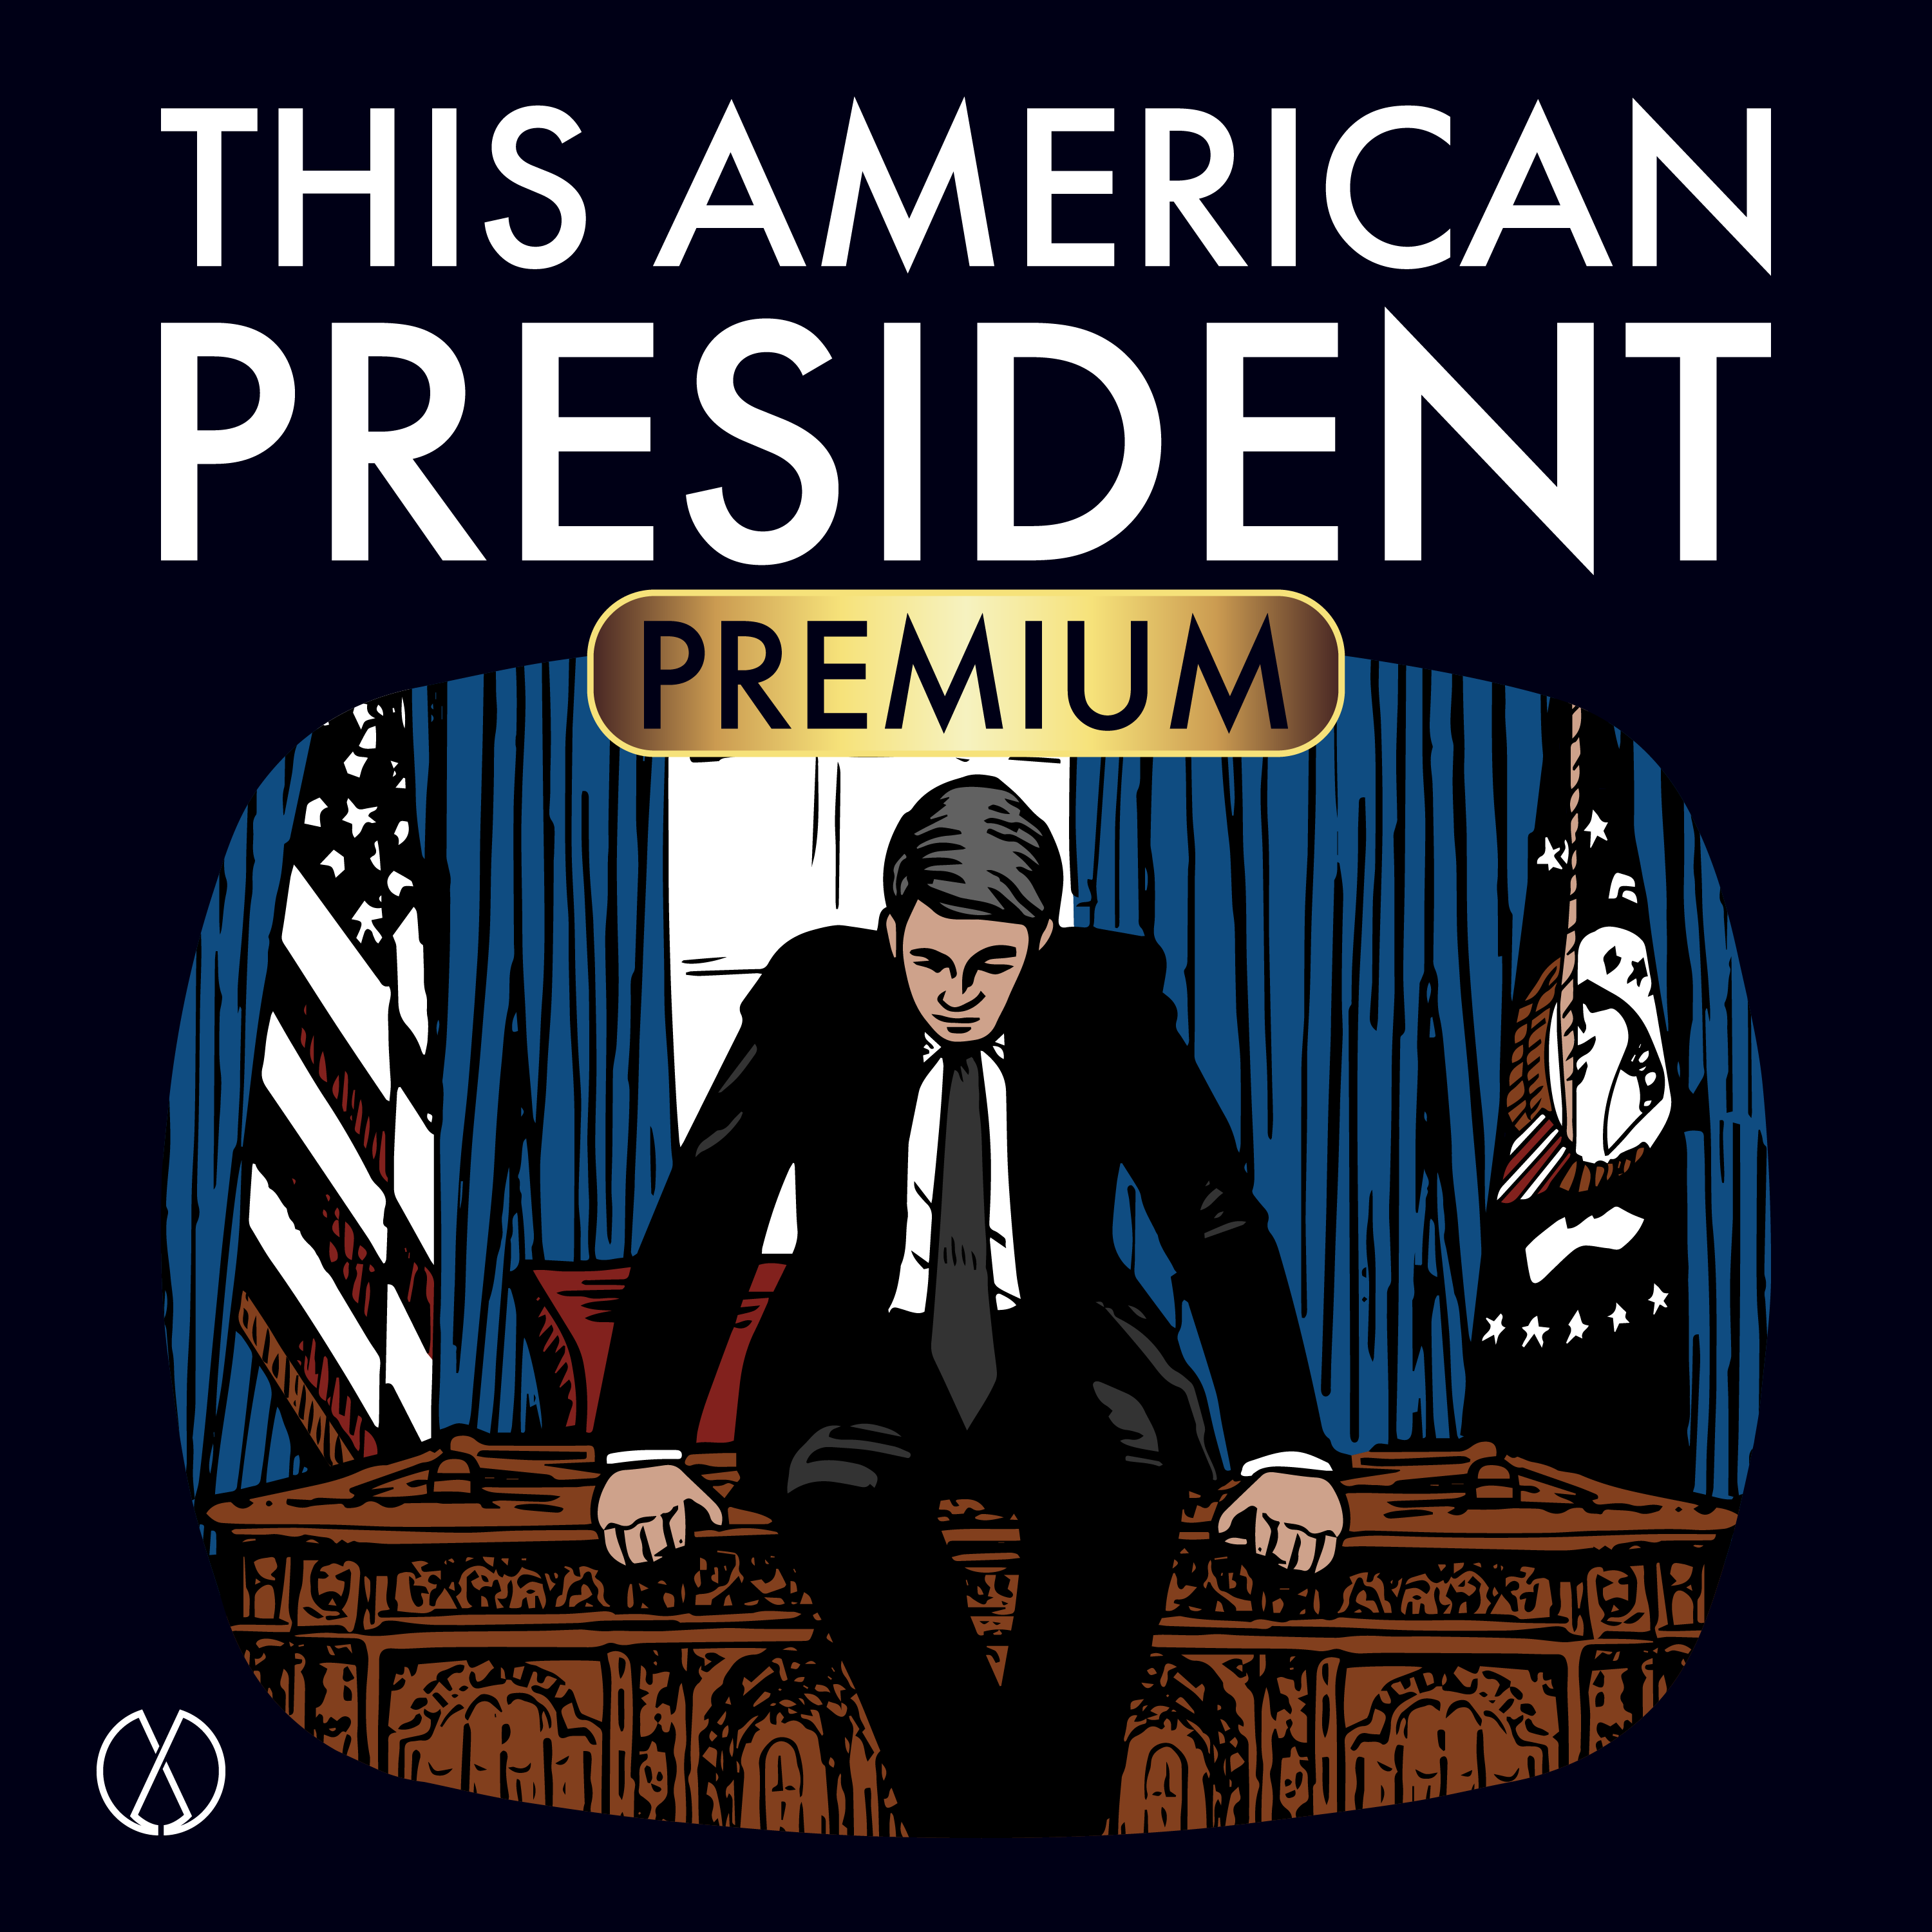 This American President Premium logo